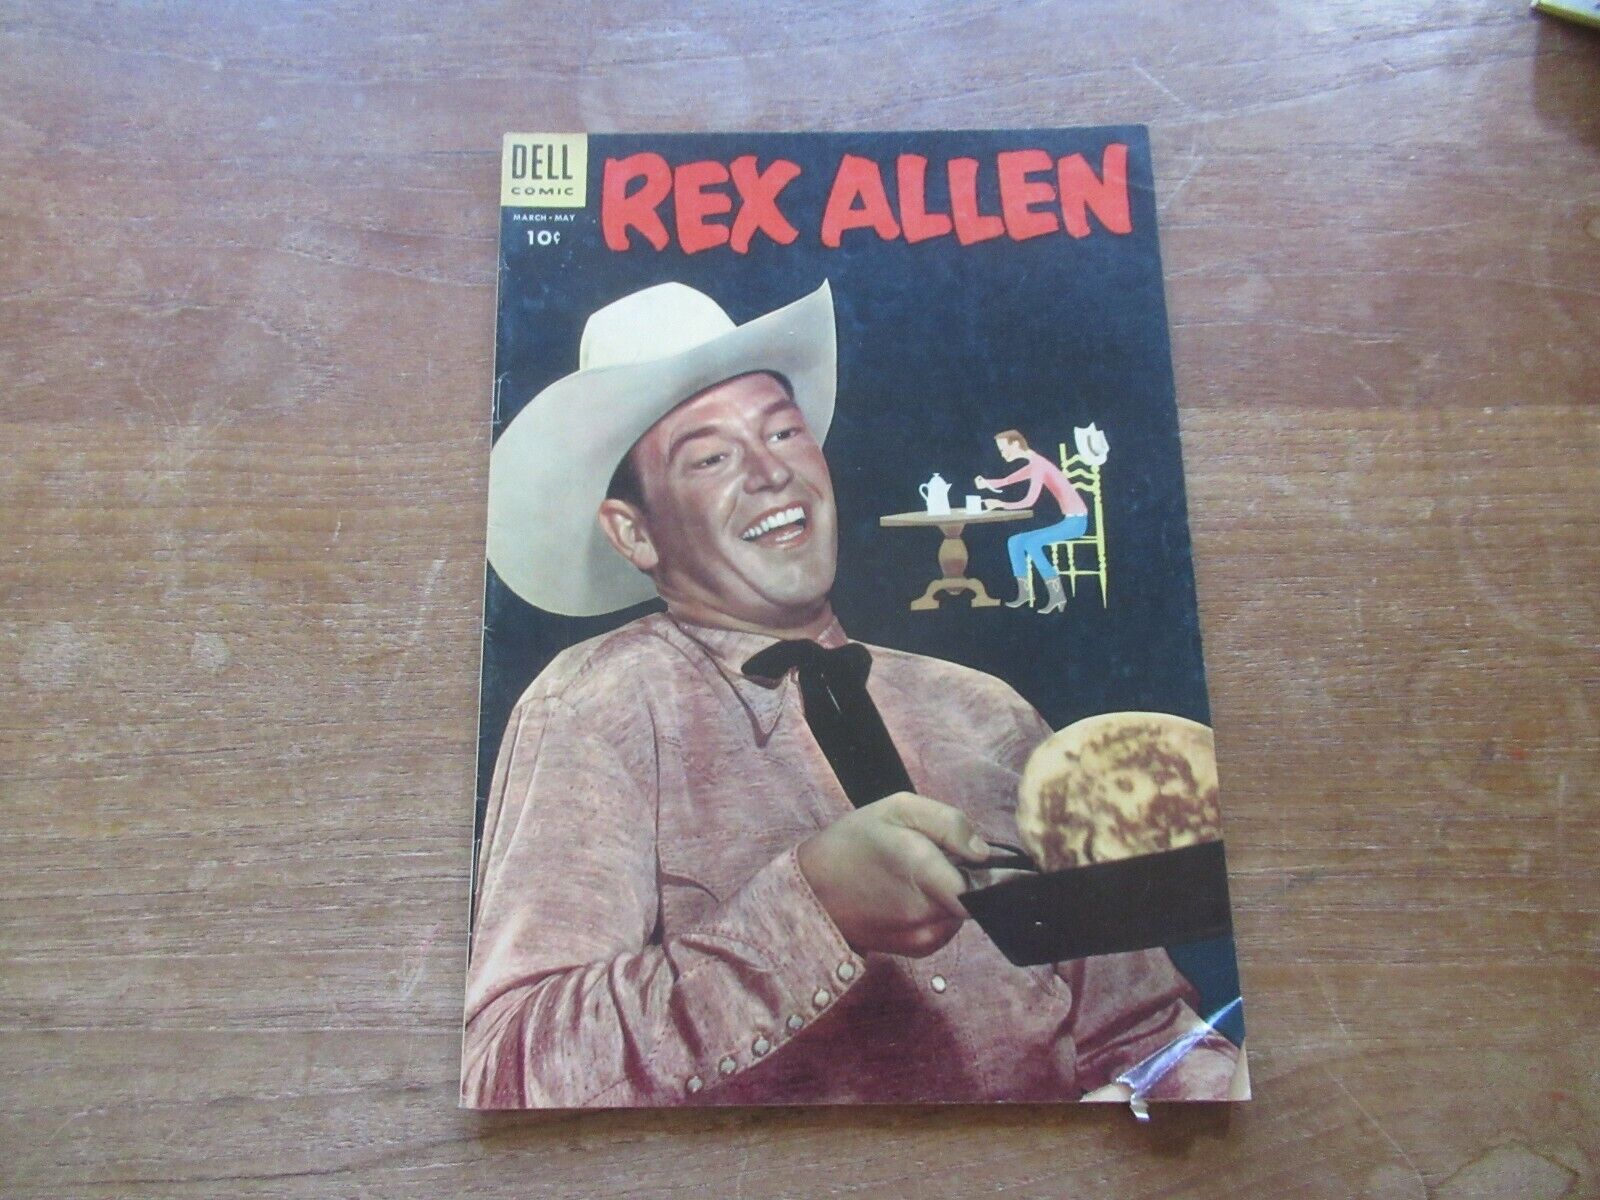 REX ALLEN #16 DELL GOLDEN AGE HIGHER GRADE SWEET PHOTO COVER 